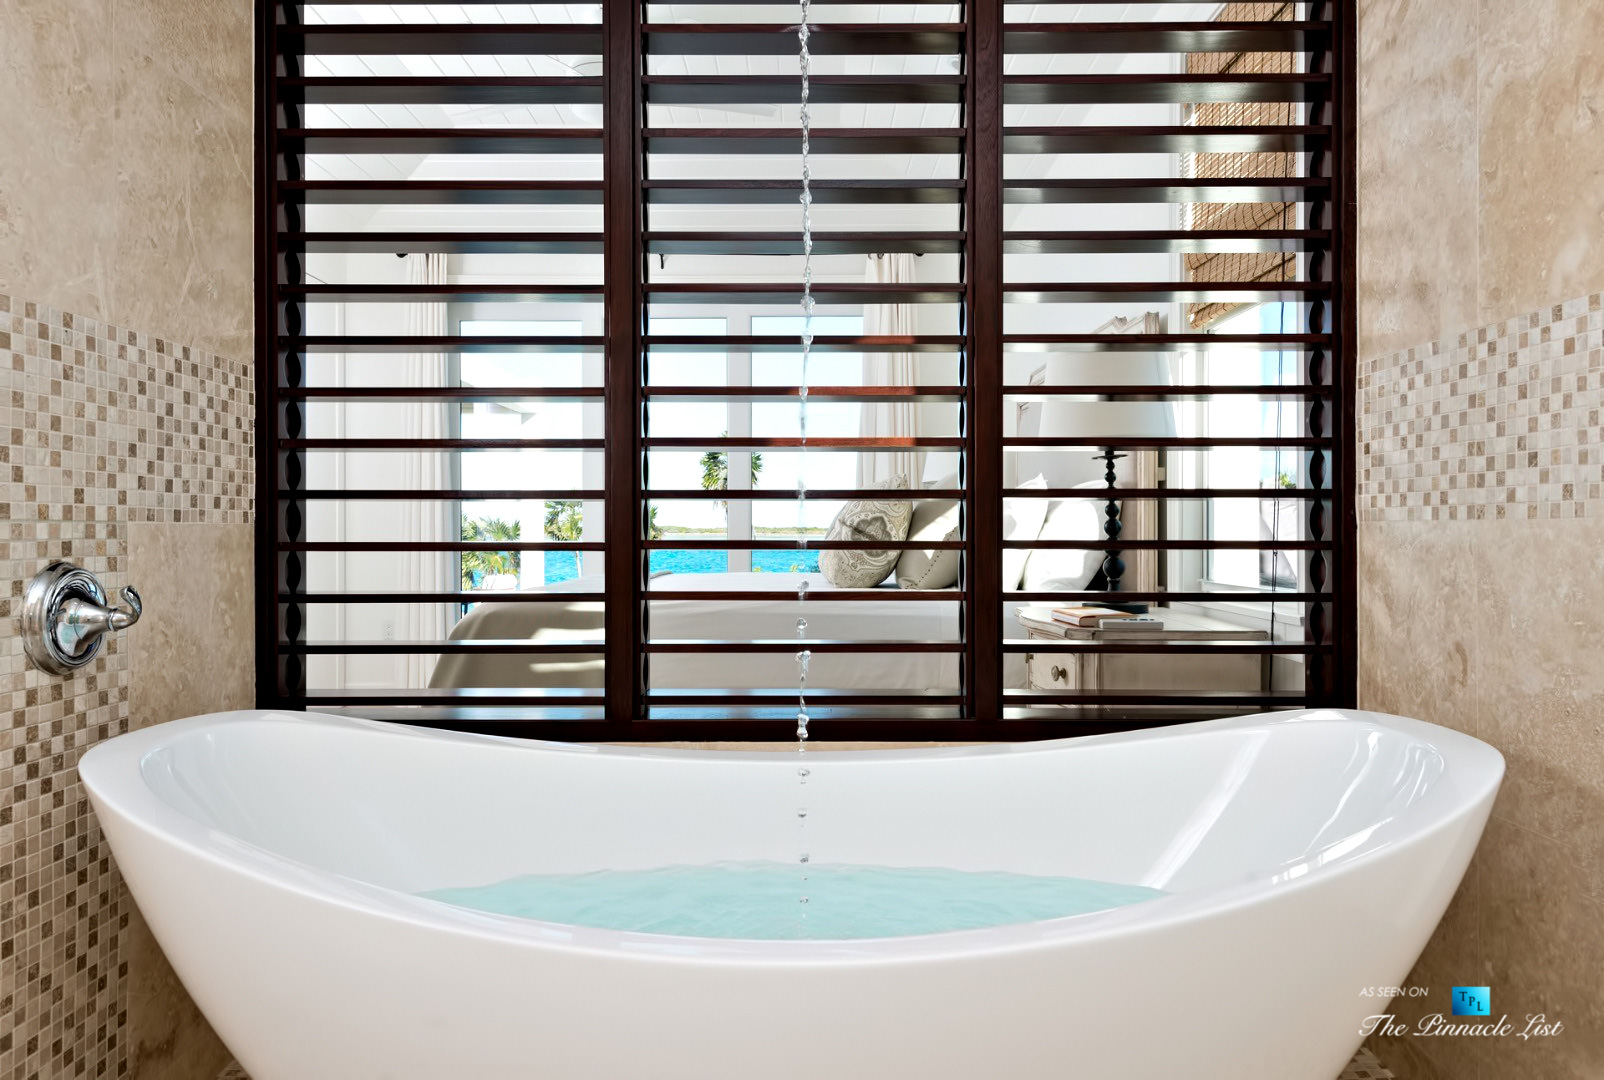 Villa Aquazure - Providenciales, Turks and Caicos Islands - Master Bathroom Freestanding Tub - Luxury Real Estate - Beachfront Home